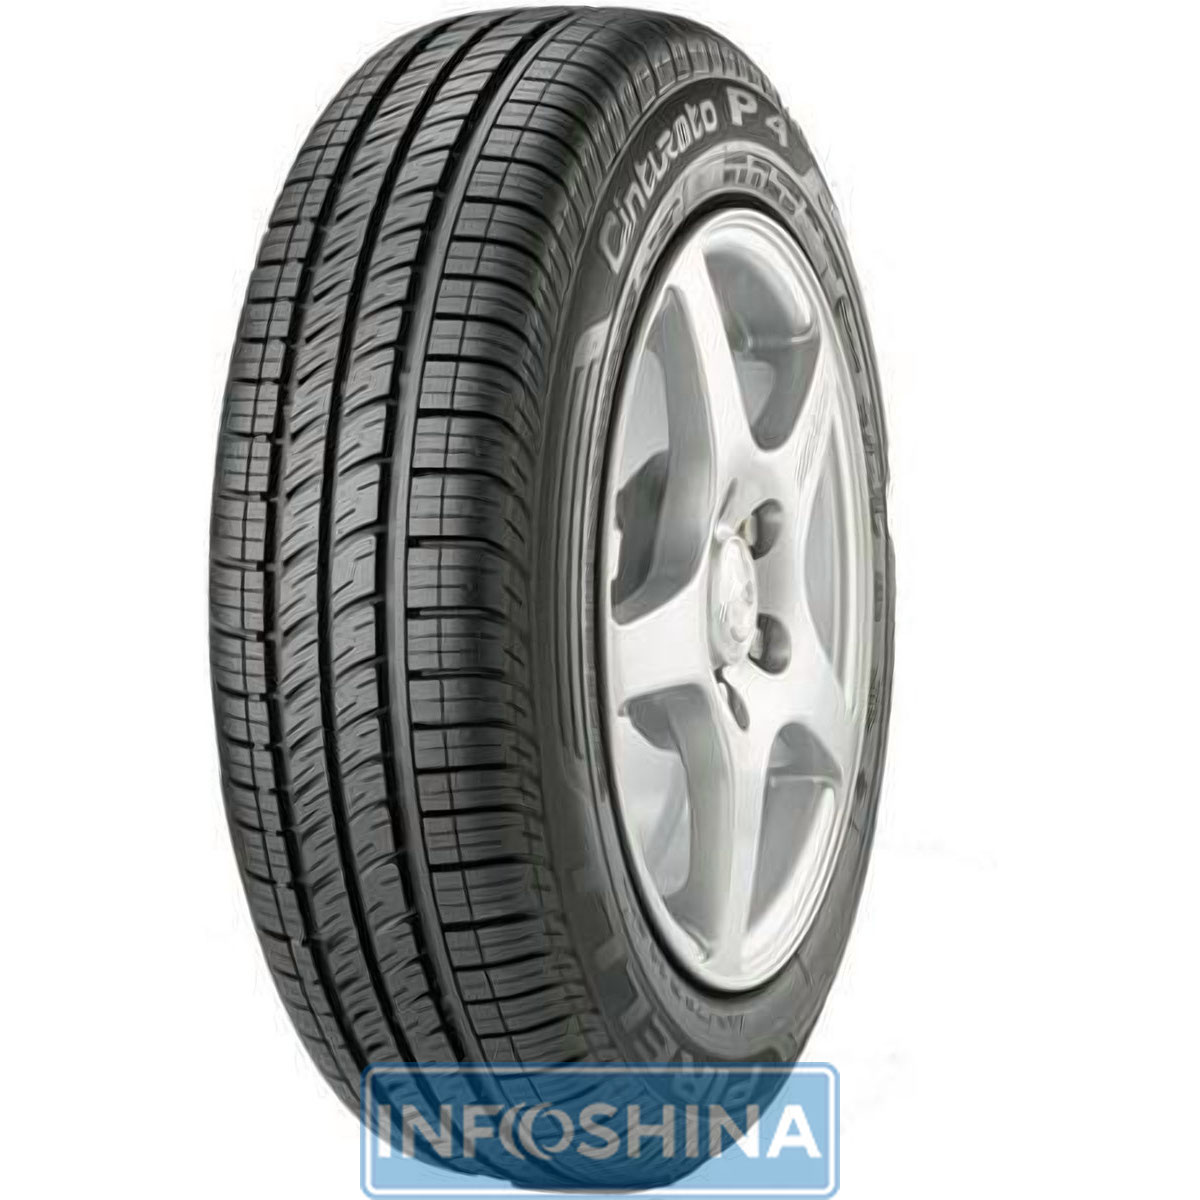 Купить шины Pirelli Cinturato P4 155/65 R13 73T